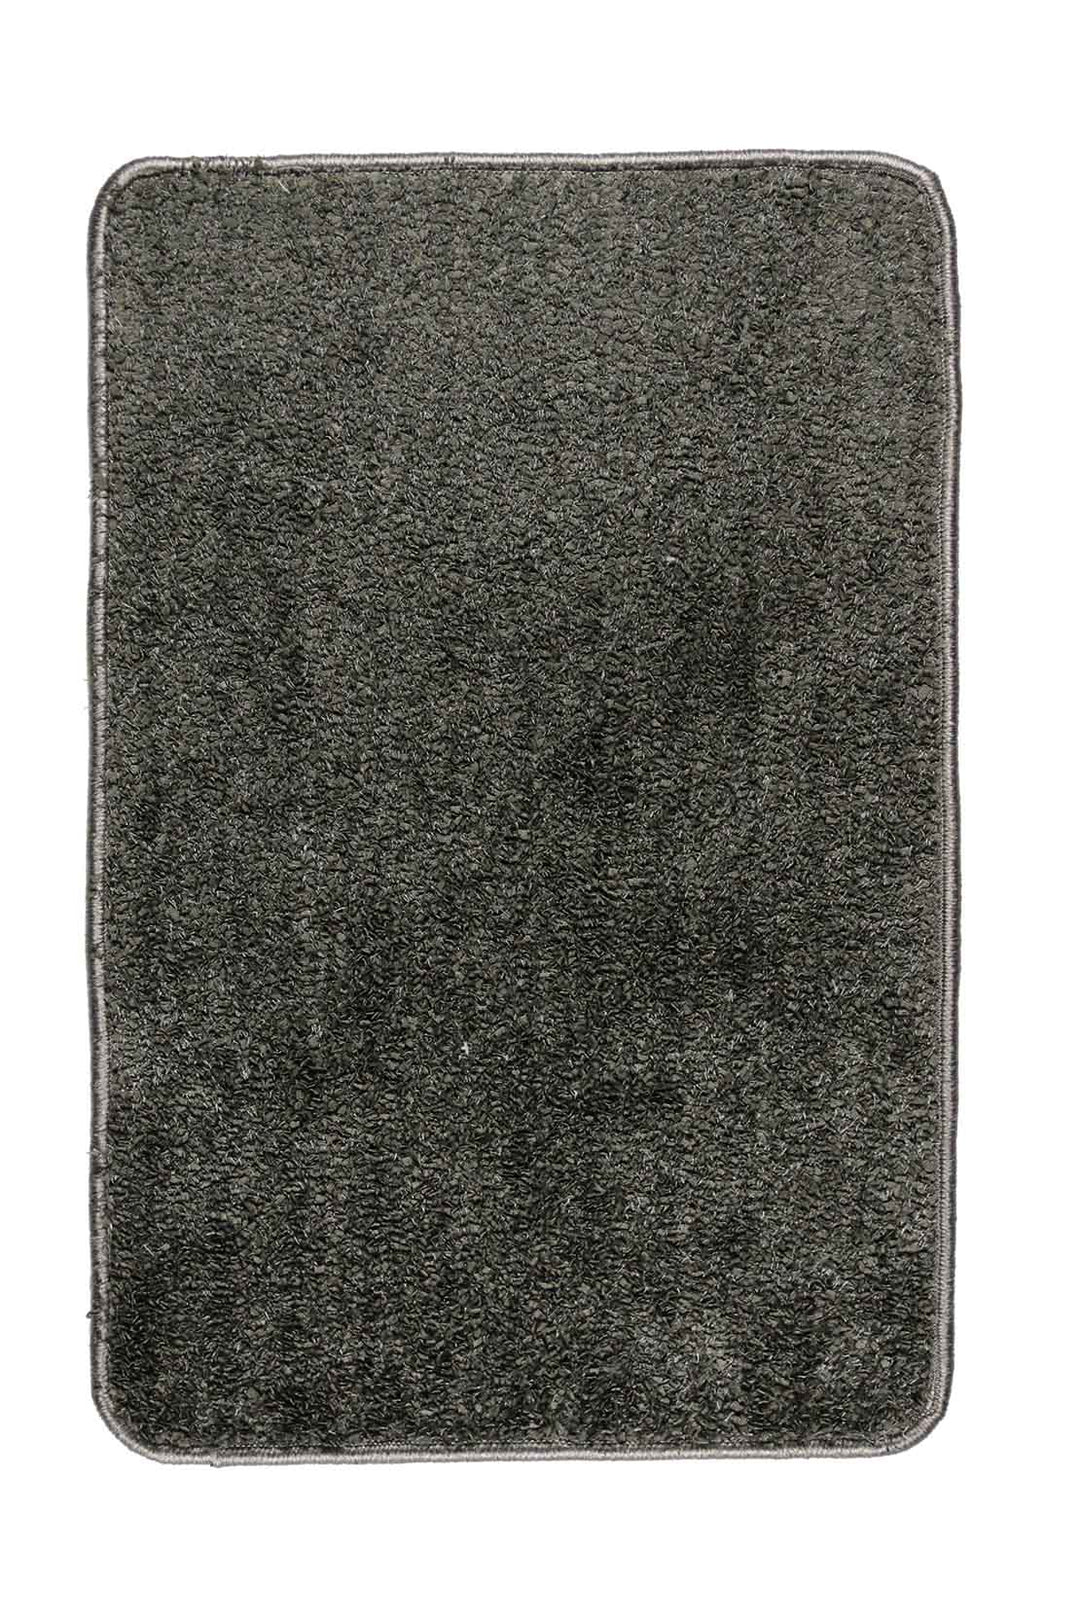 Fabric Shaggy Door Mat Gray - V Surfaces